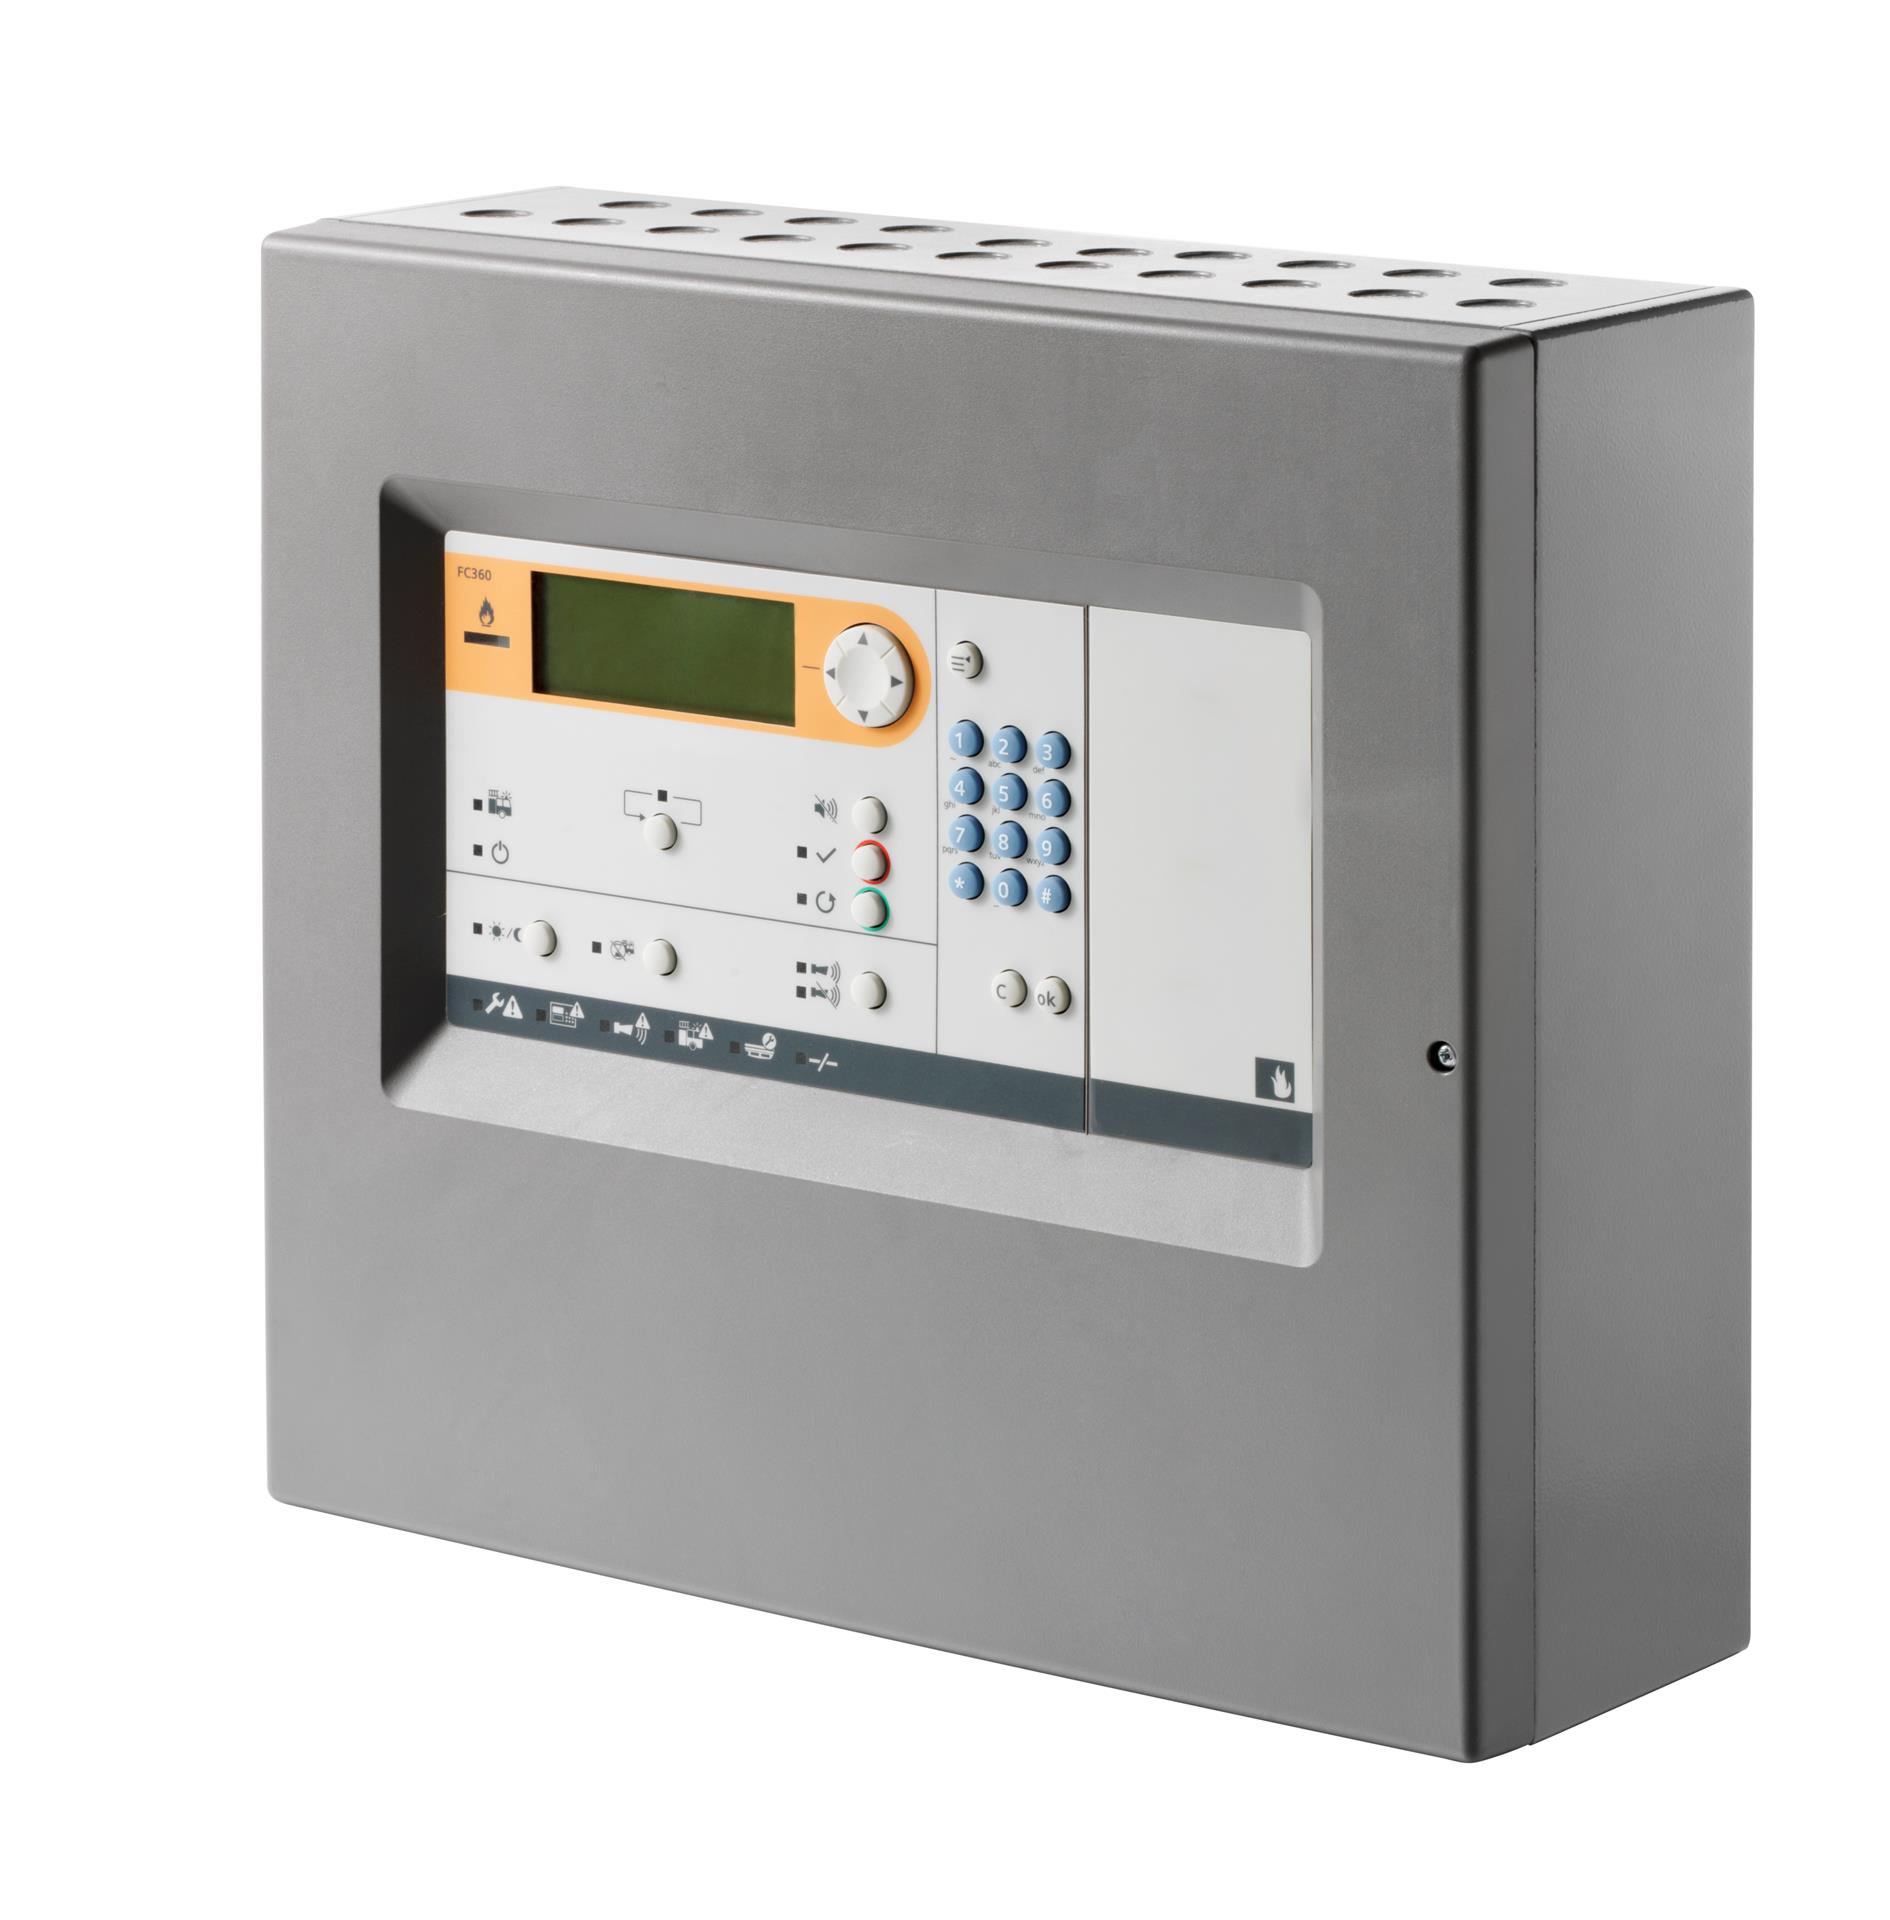 SIEMENS FC361-ZZ Cerberus FIT İnteraktif Yangın Algılama ve Alarm Kontrol Paneli – Kompakt Kasa (1 loop, 126 adres)